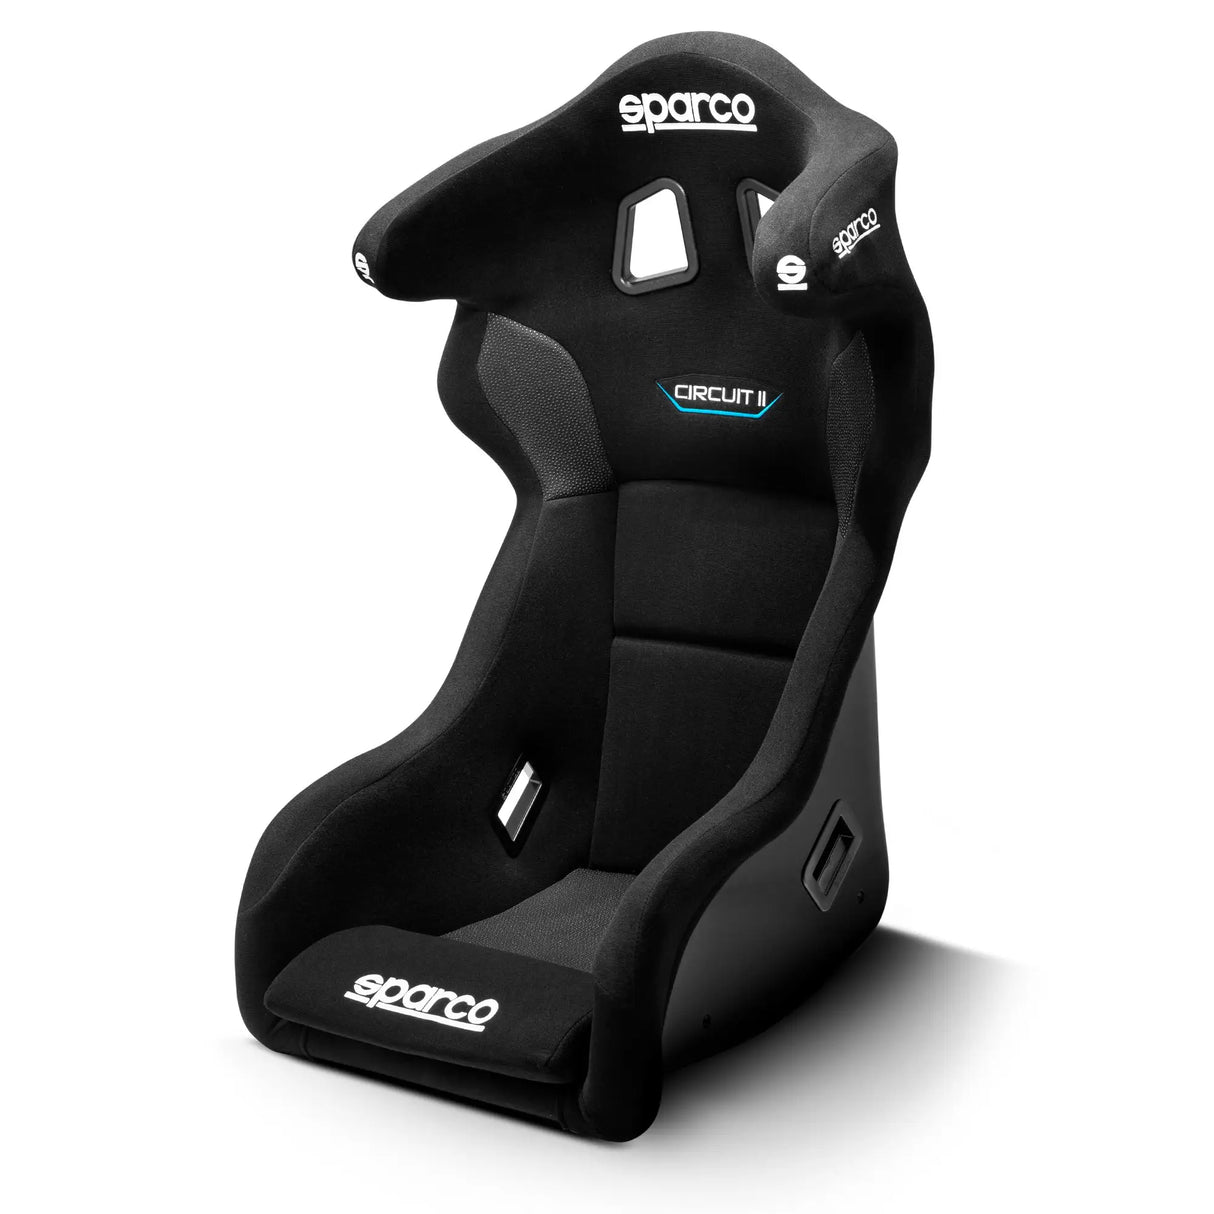 SPARCO SEAT RACE CIRCUIT II